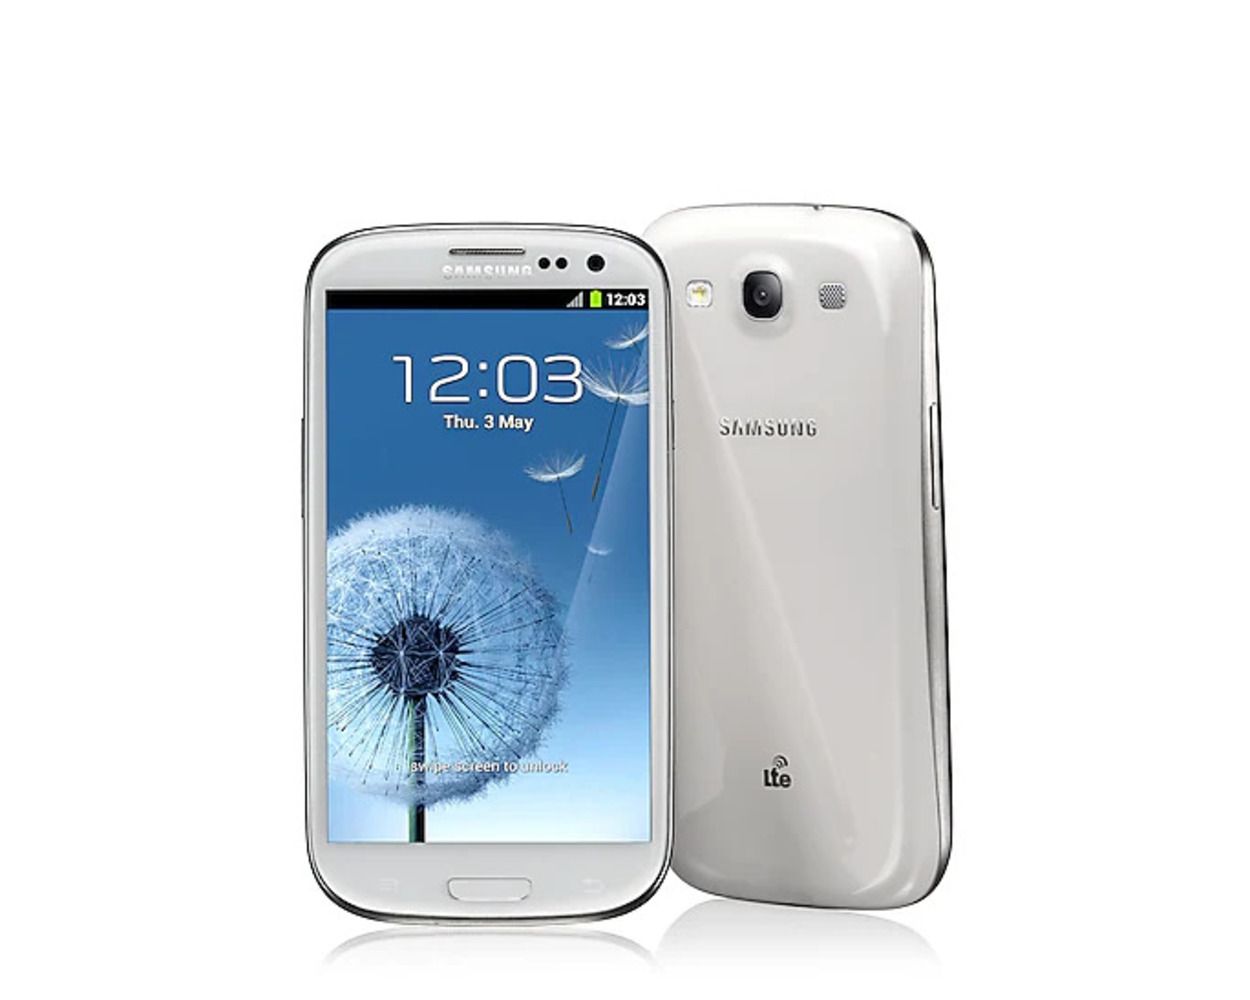 Um Samsung Galaxy SIII branco.